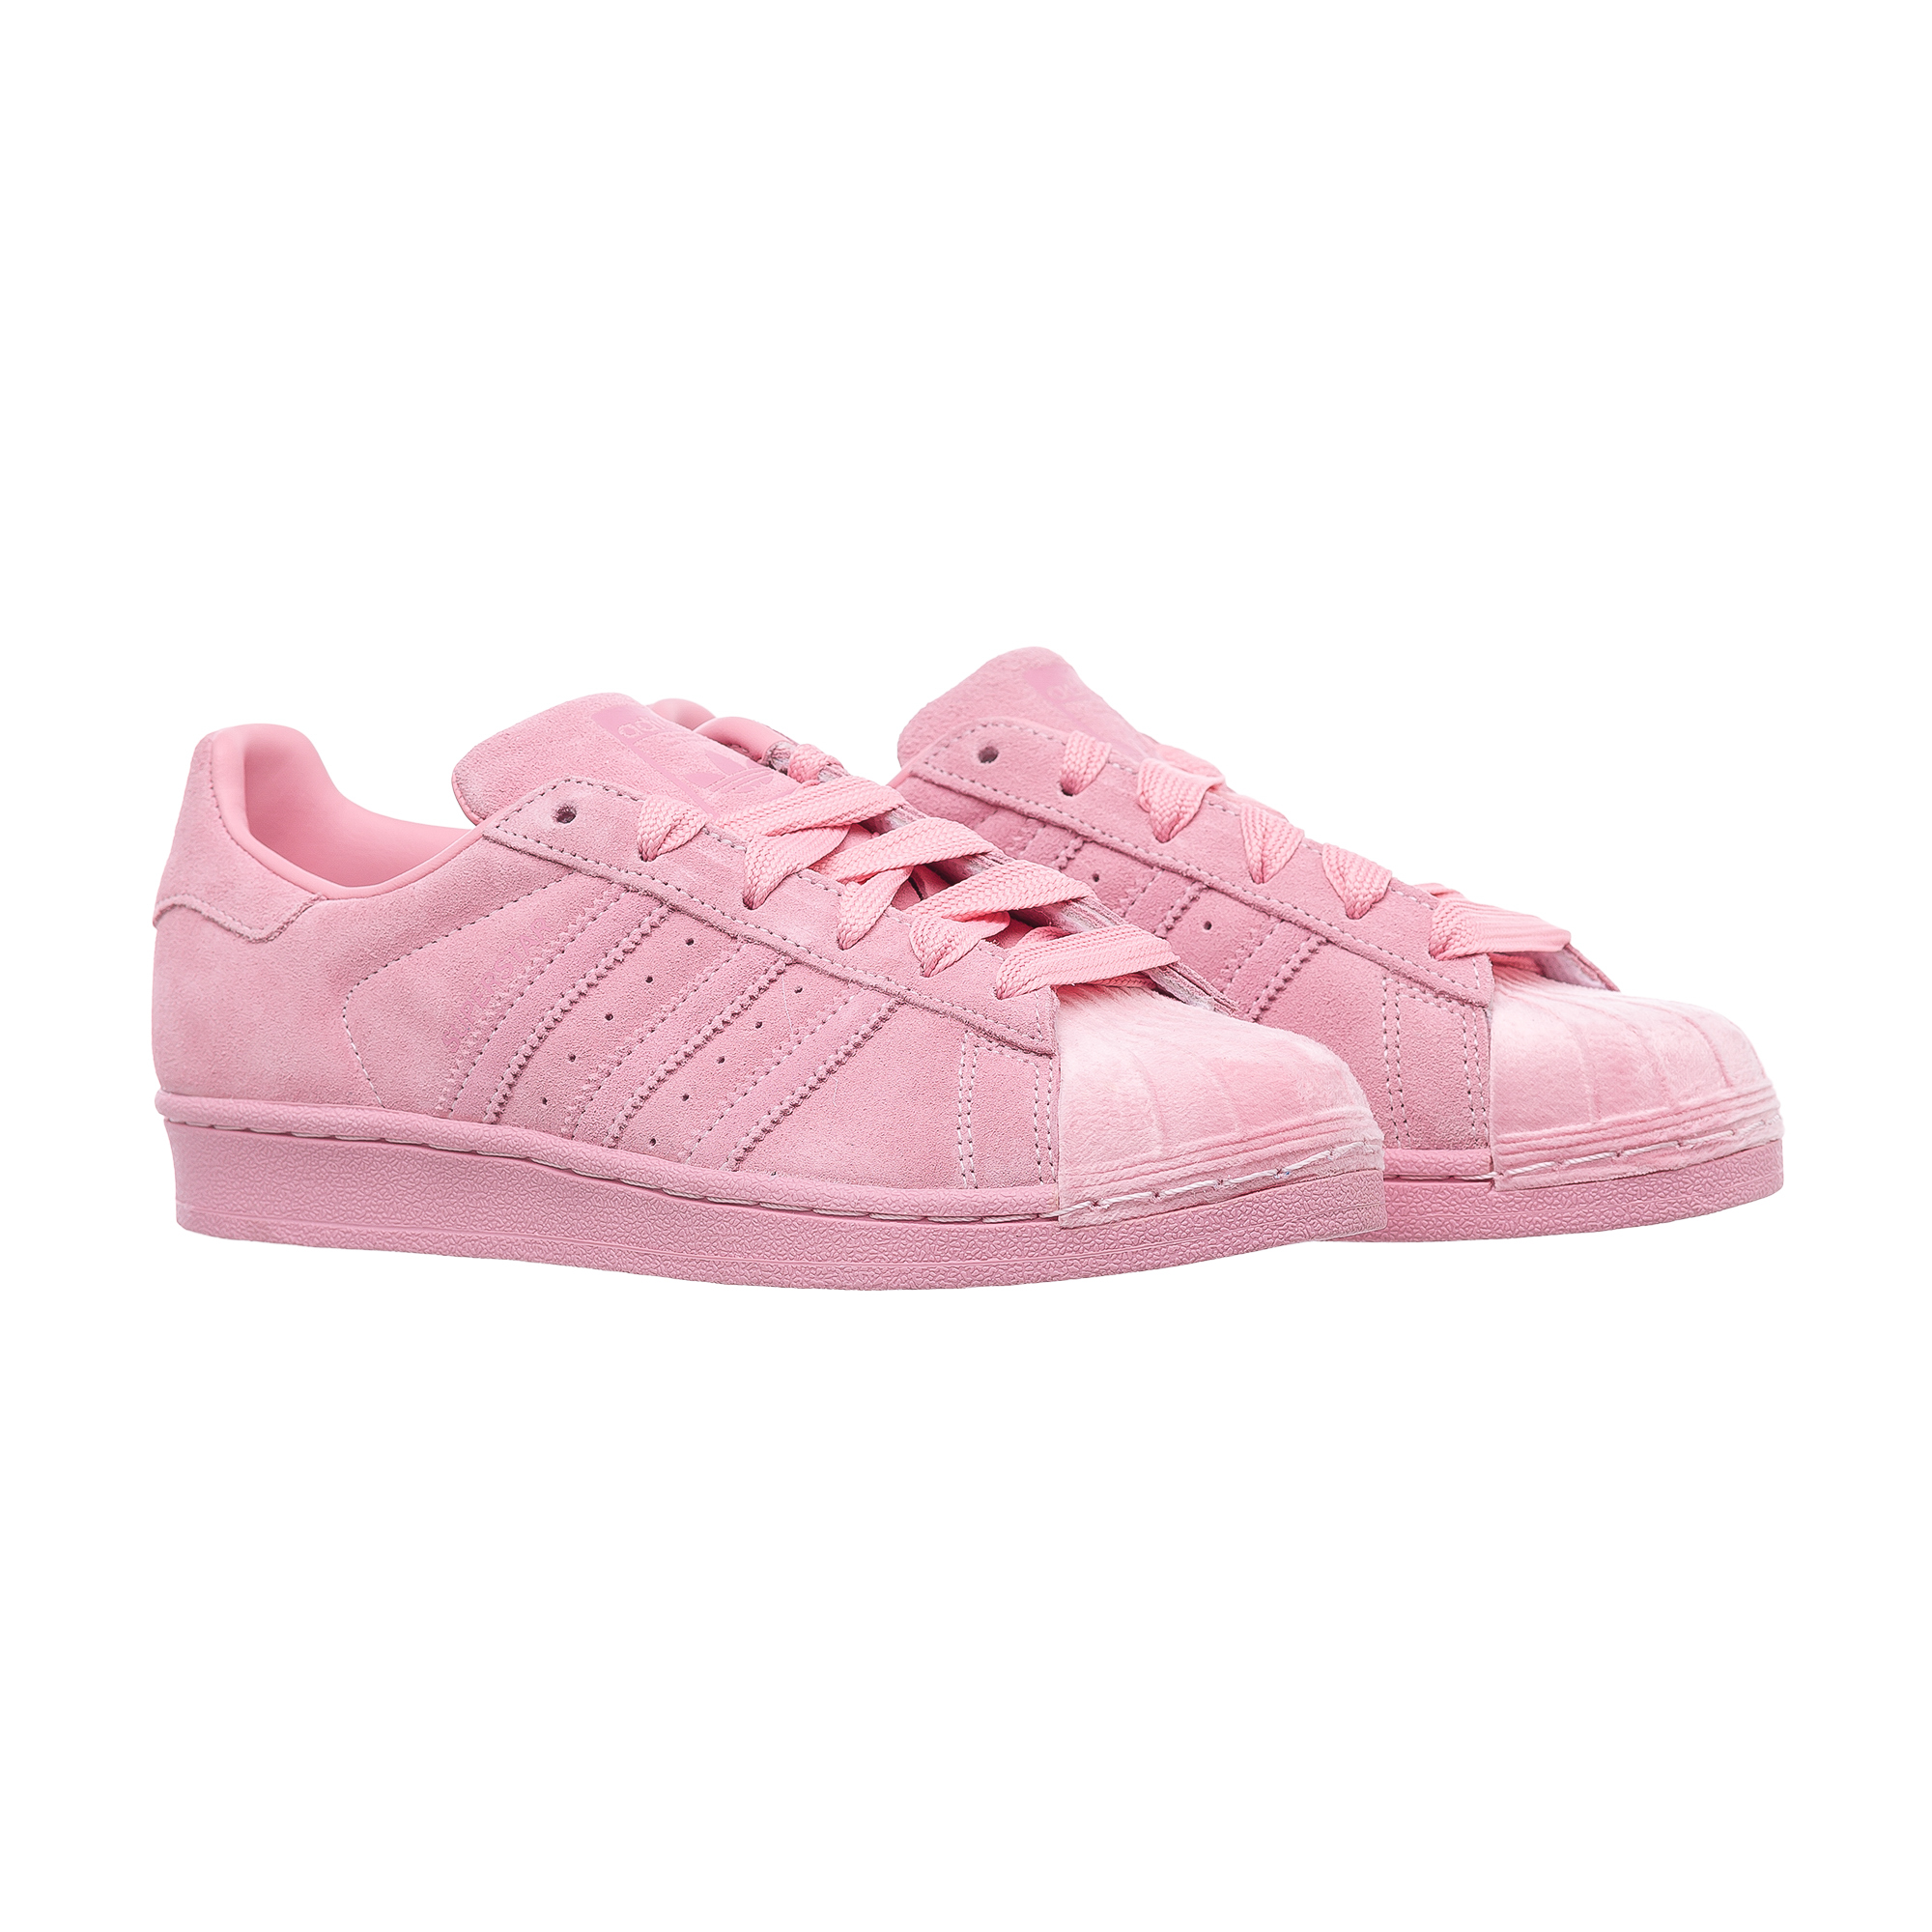 SUPERSTAR W Adidas, размер 37, цвет розовый ADCG6004 - фото 2